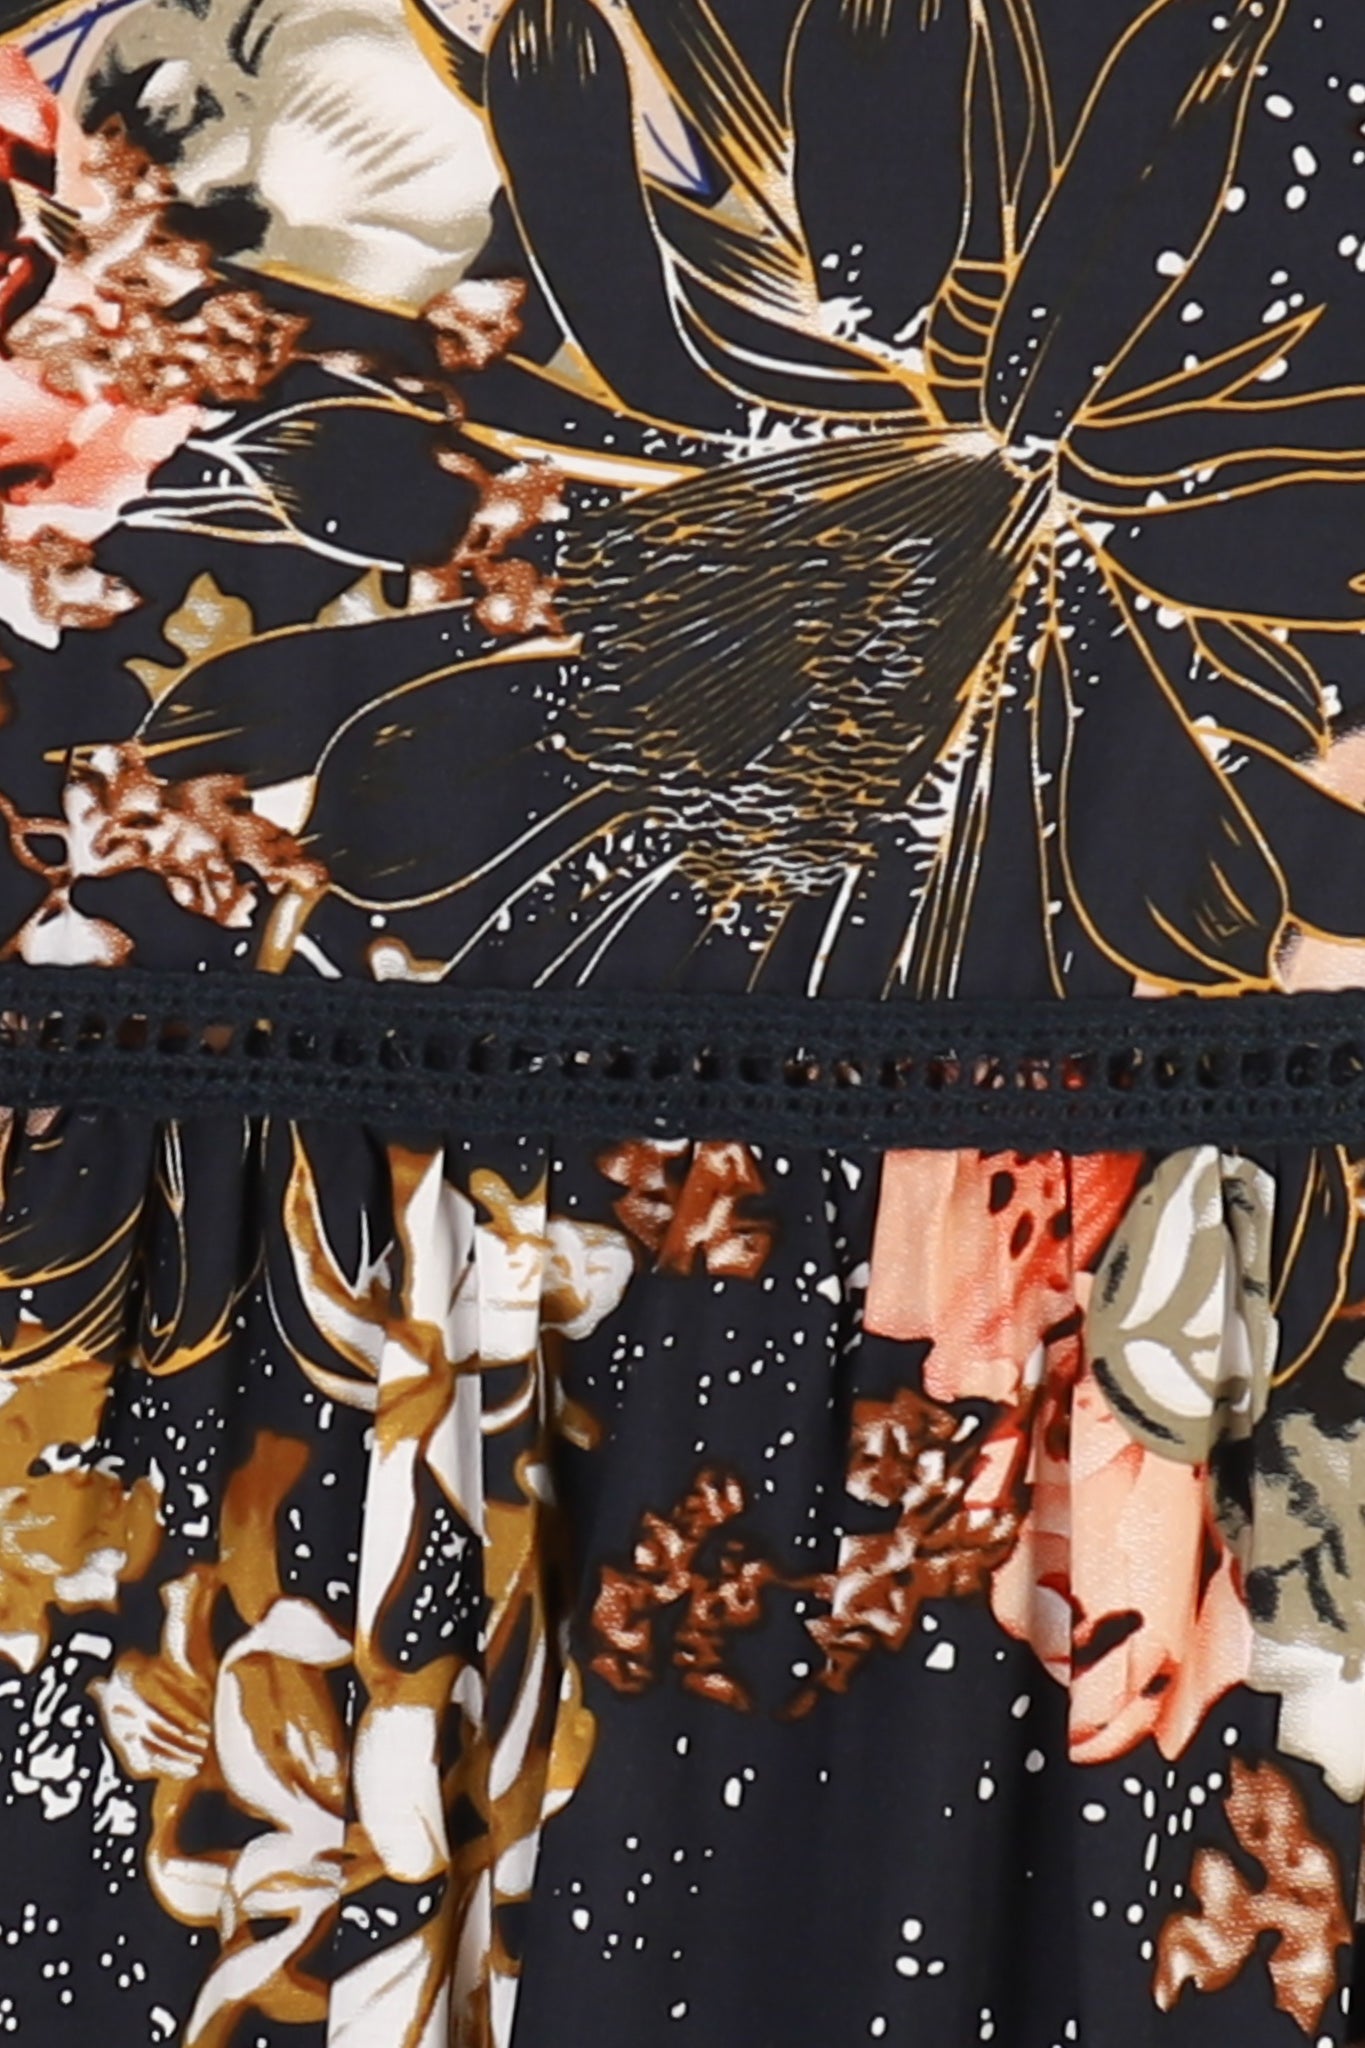 JAASE - Heidi Midi Dress: Tiered Sun Dress with Crochet Splicing in Indigo Print